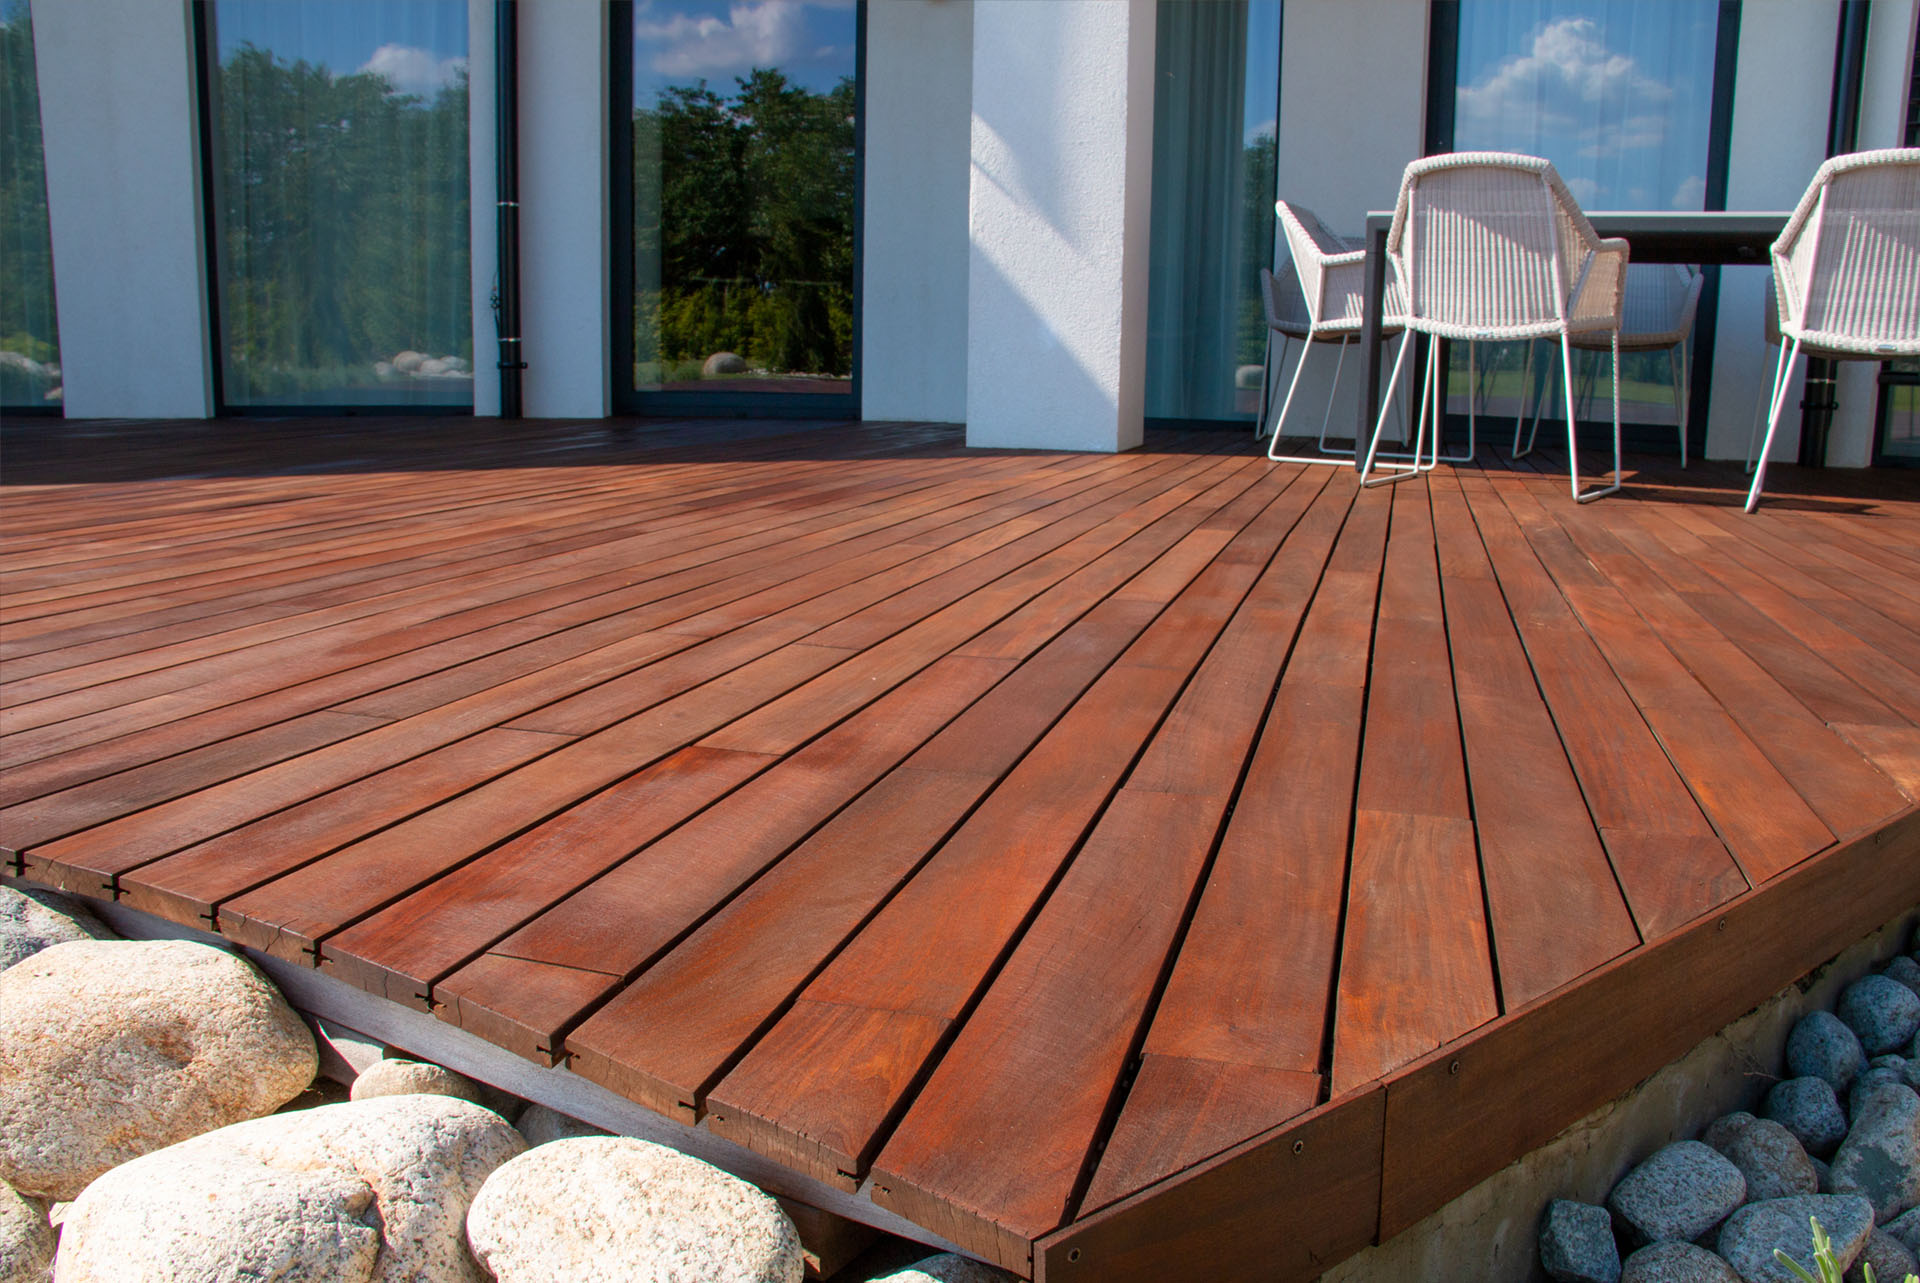 Timber Decking wooden deck boards hardwood pressure treated smooth dark wood patio